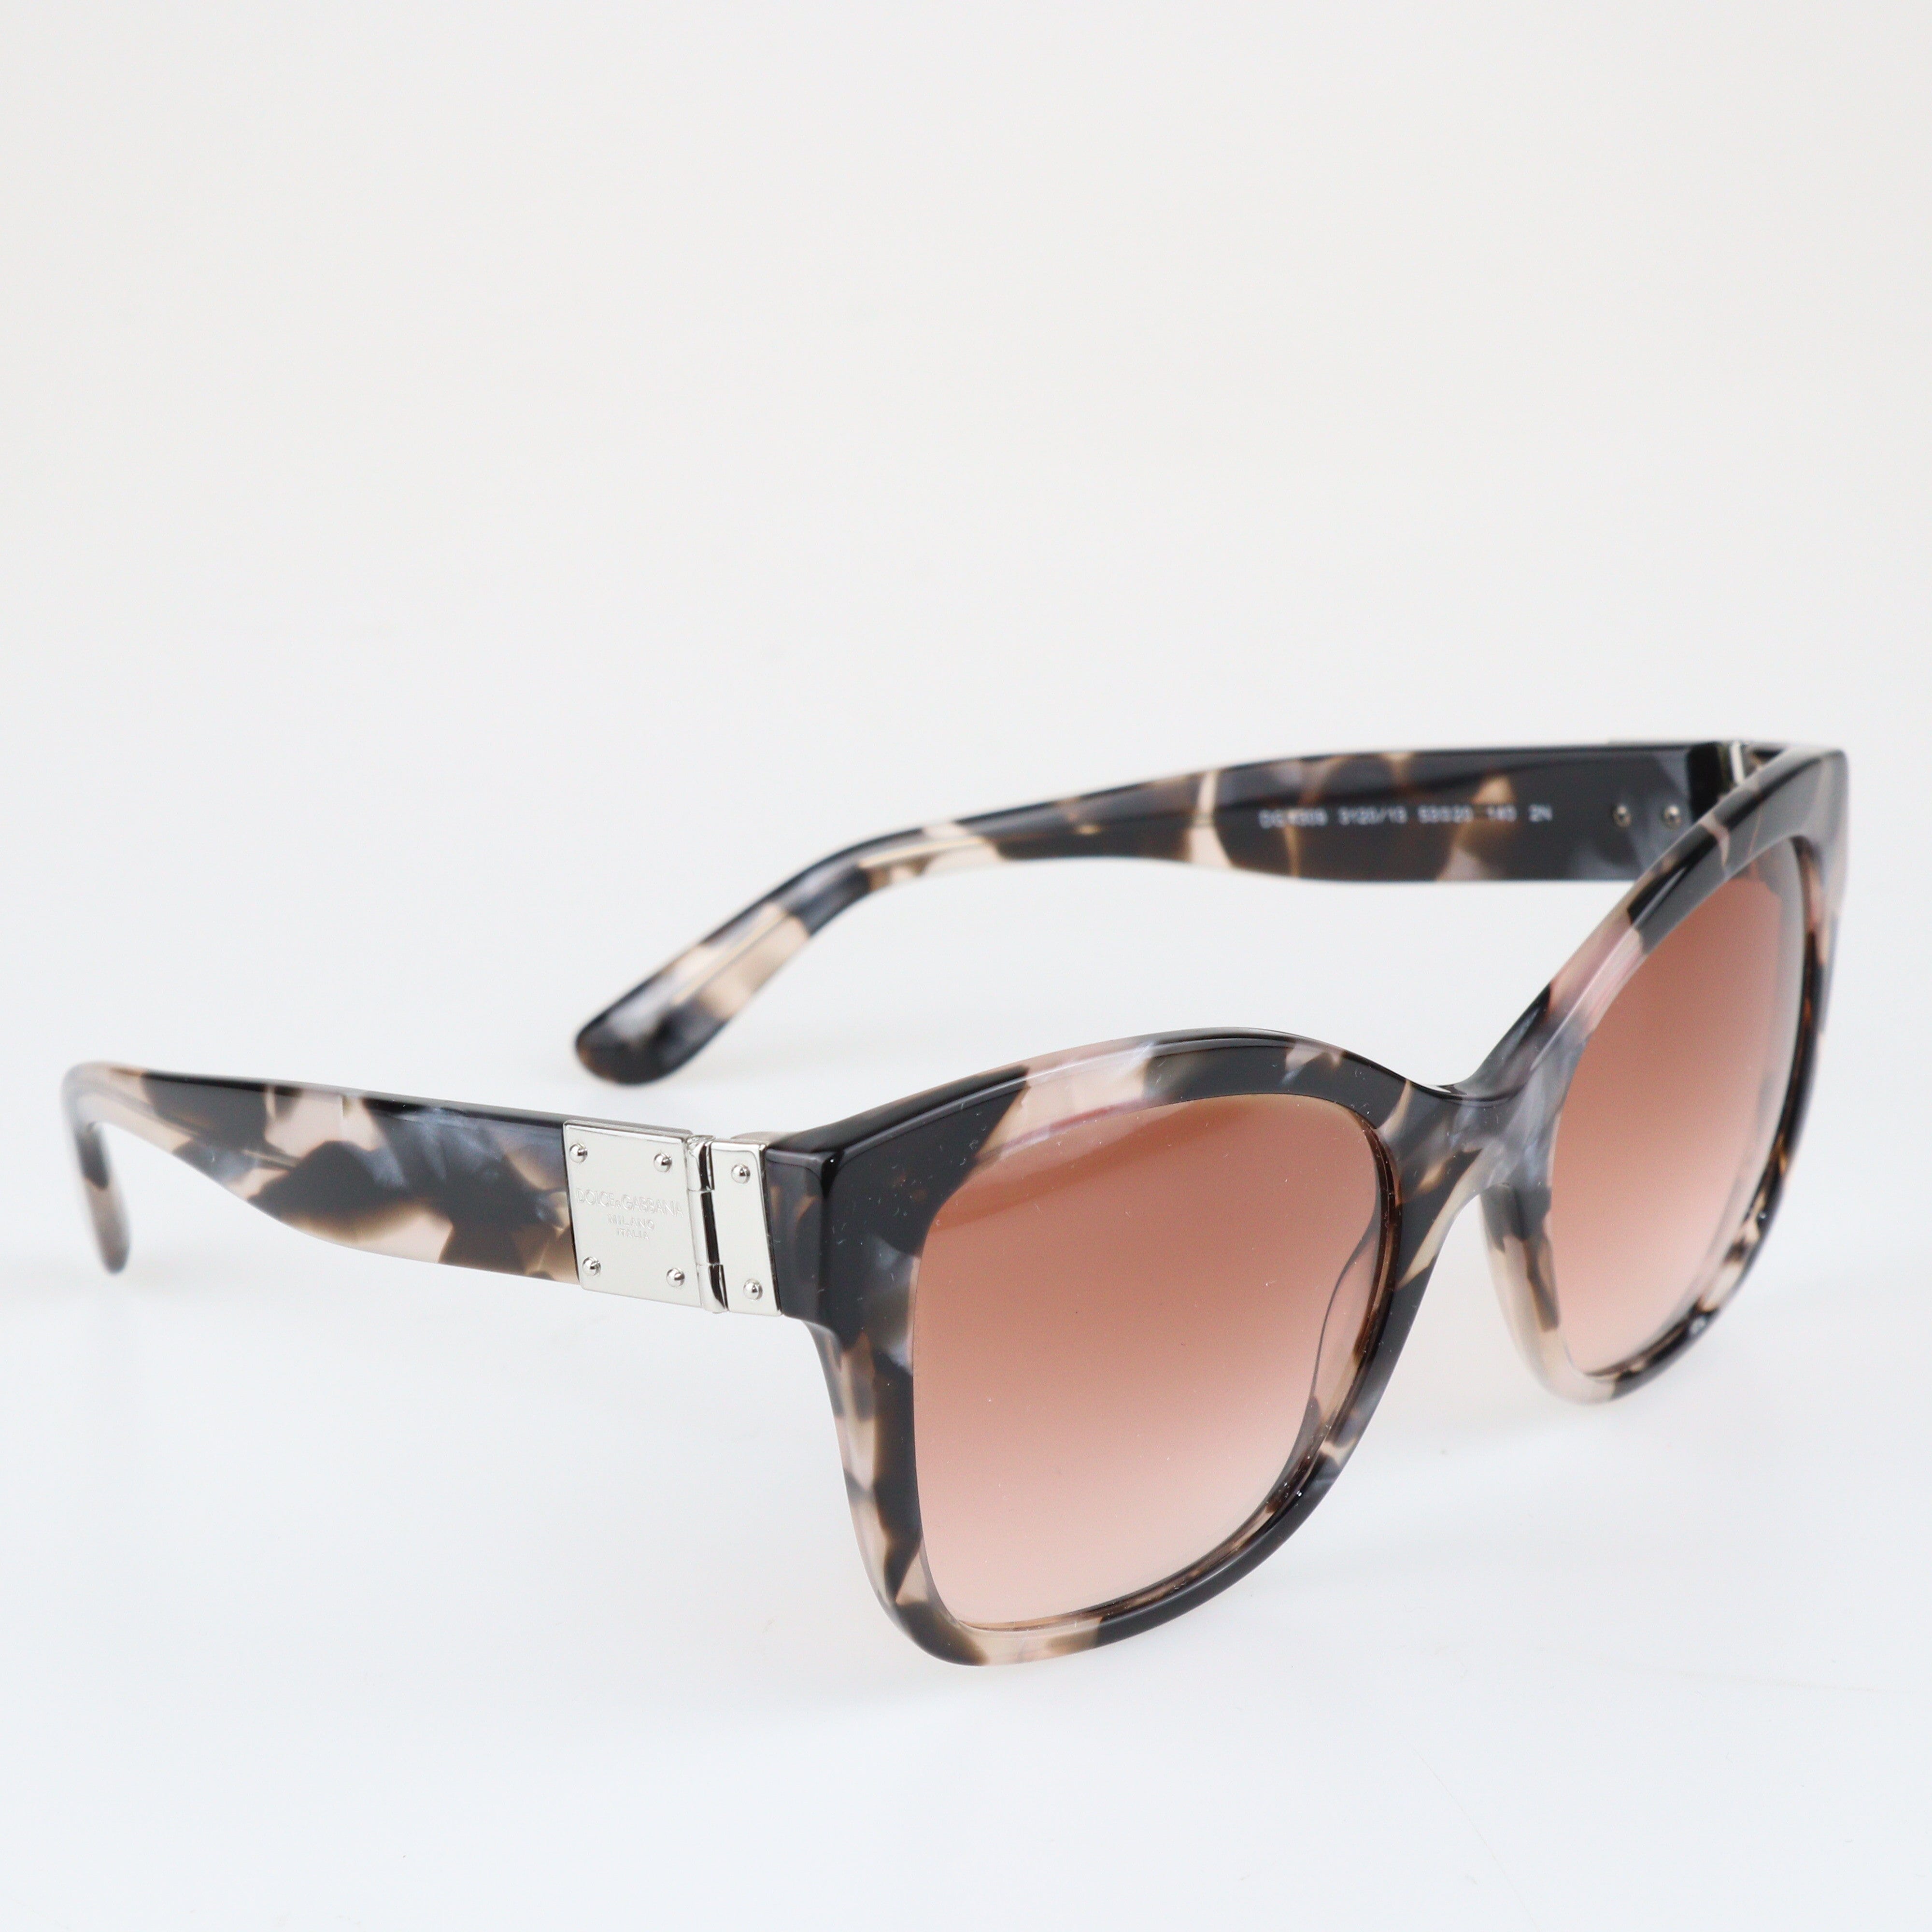 Brown/Pink Tortoiseshell Gradient DG 4309 Sunglasses Accessories Dolce and Gabbana 